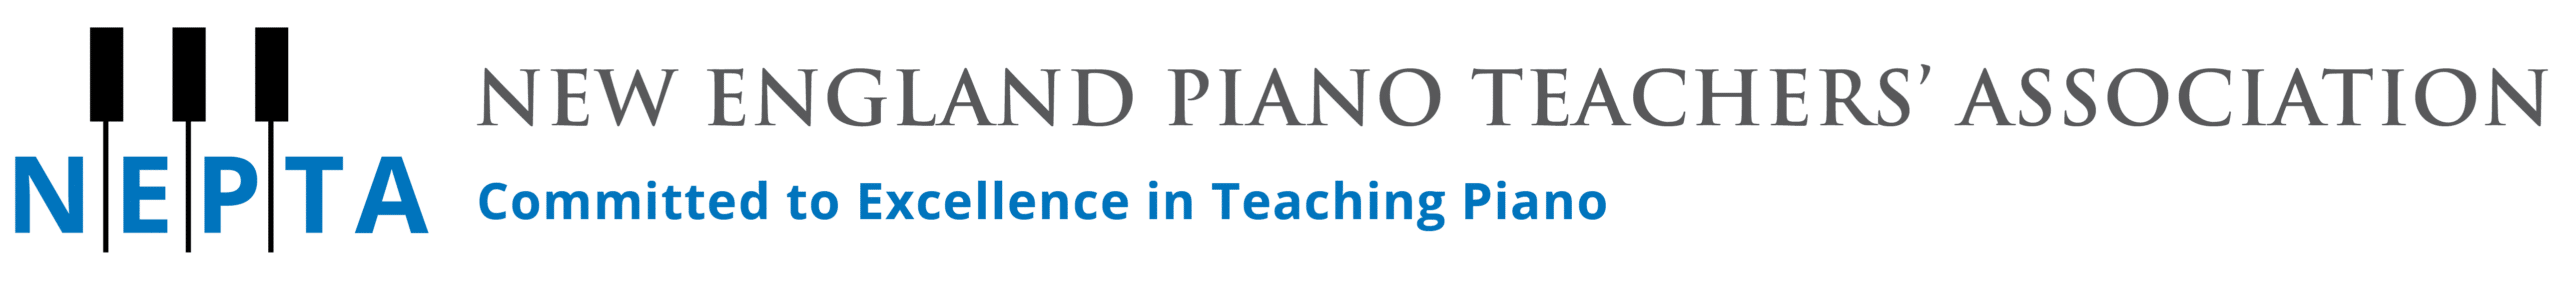 New England Piano Teachers Association